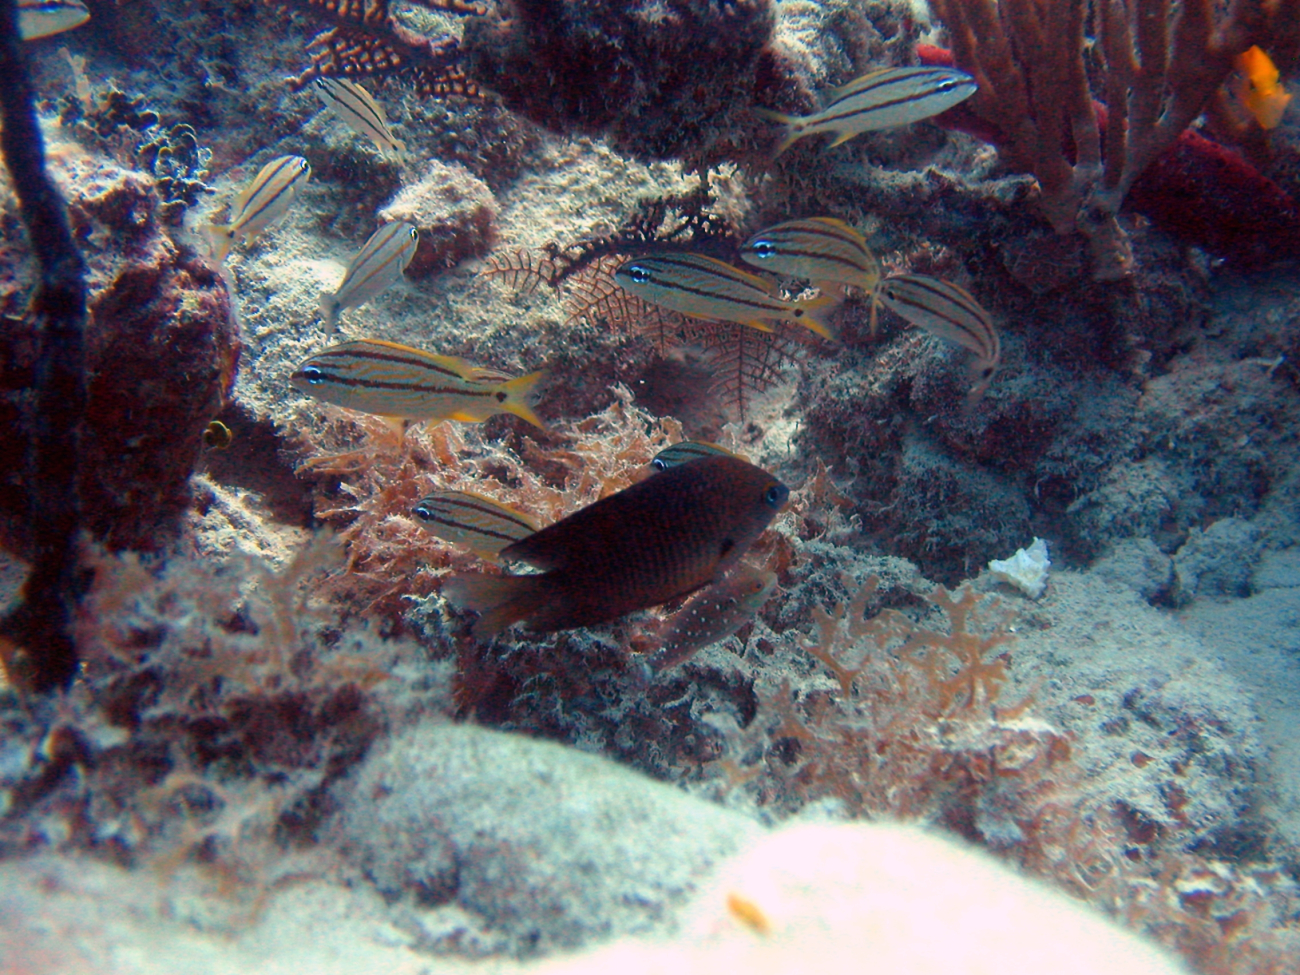 Stoplight parrotfish (Sparisoma viride), French grunt (Haemulon flavolineatum),various sponges (Porifera sp